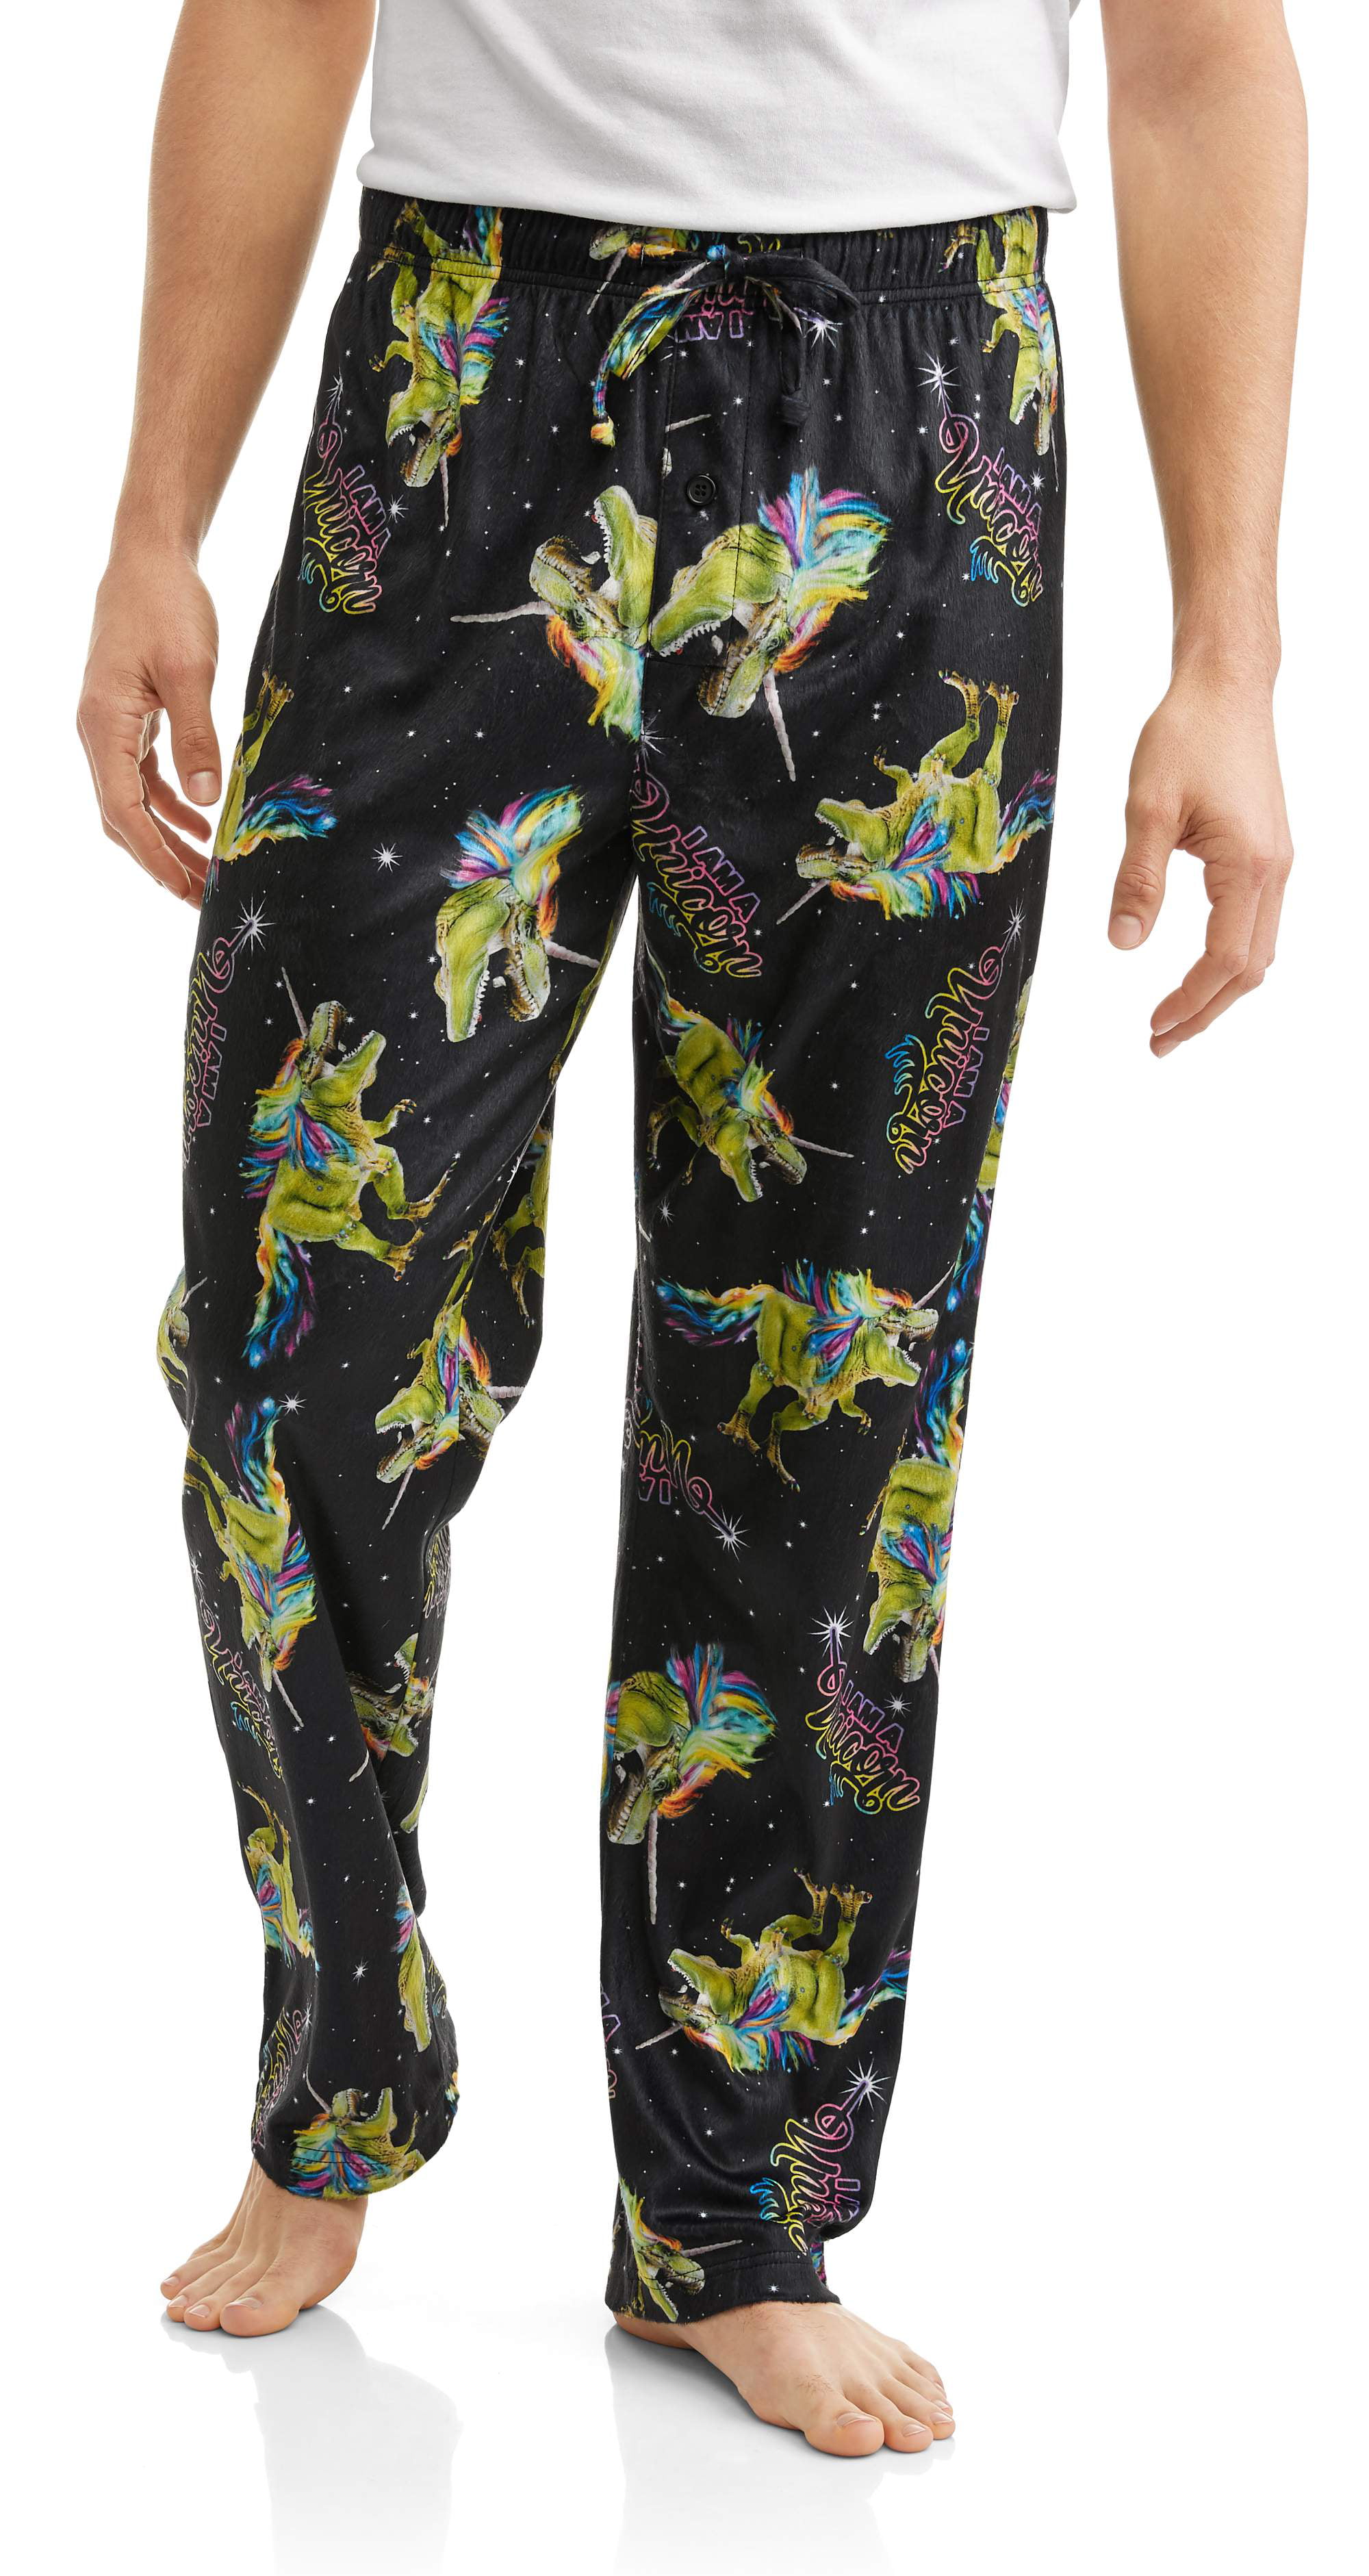 Unicorn T-Rex Men's Minky Fleece Pants, Up to Size 2XL - Walmart.com